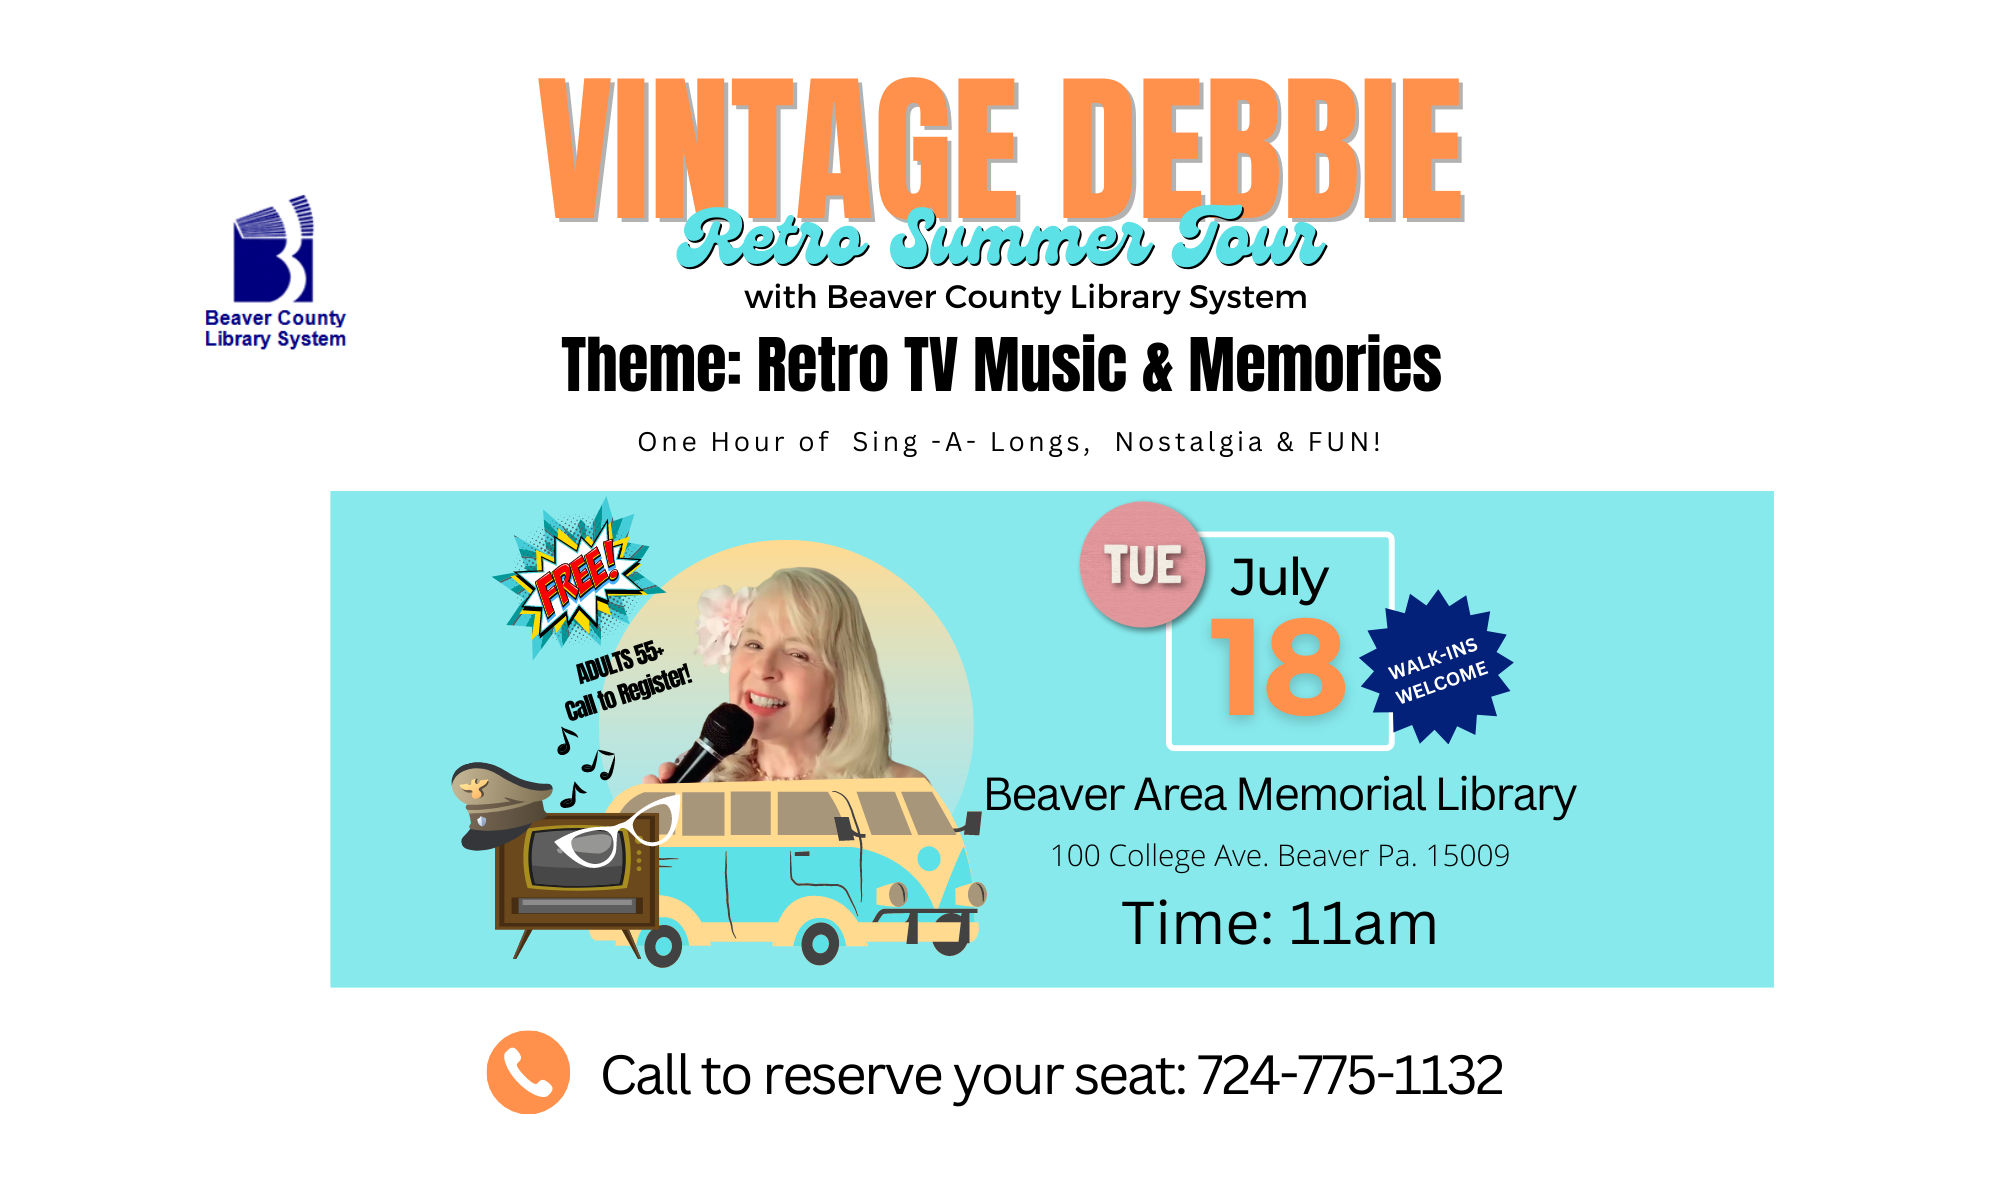 Vintage Debbie: Retro TV Music & Memories